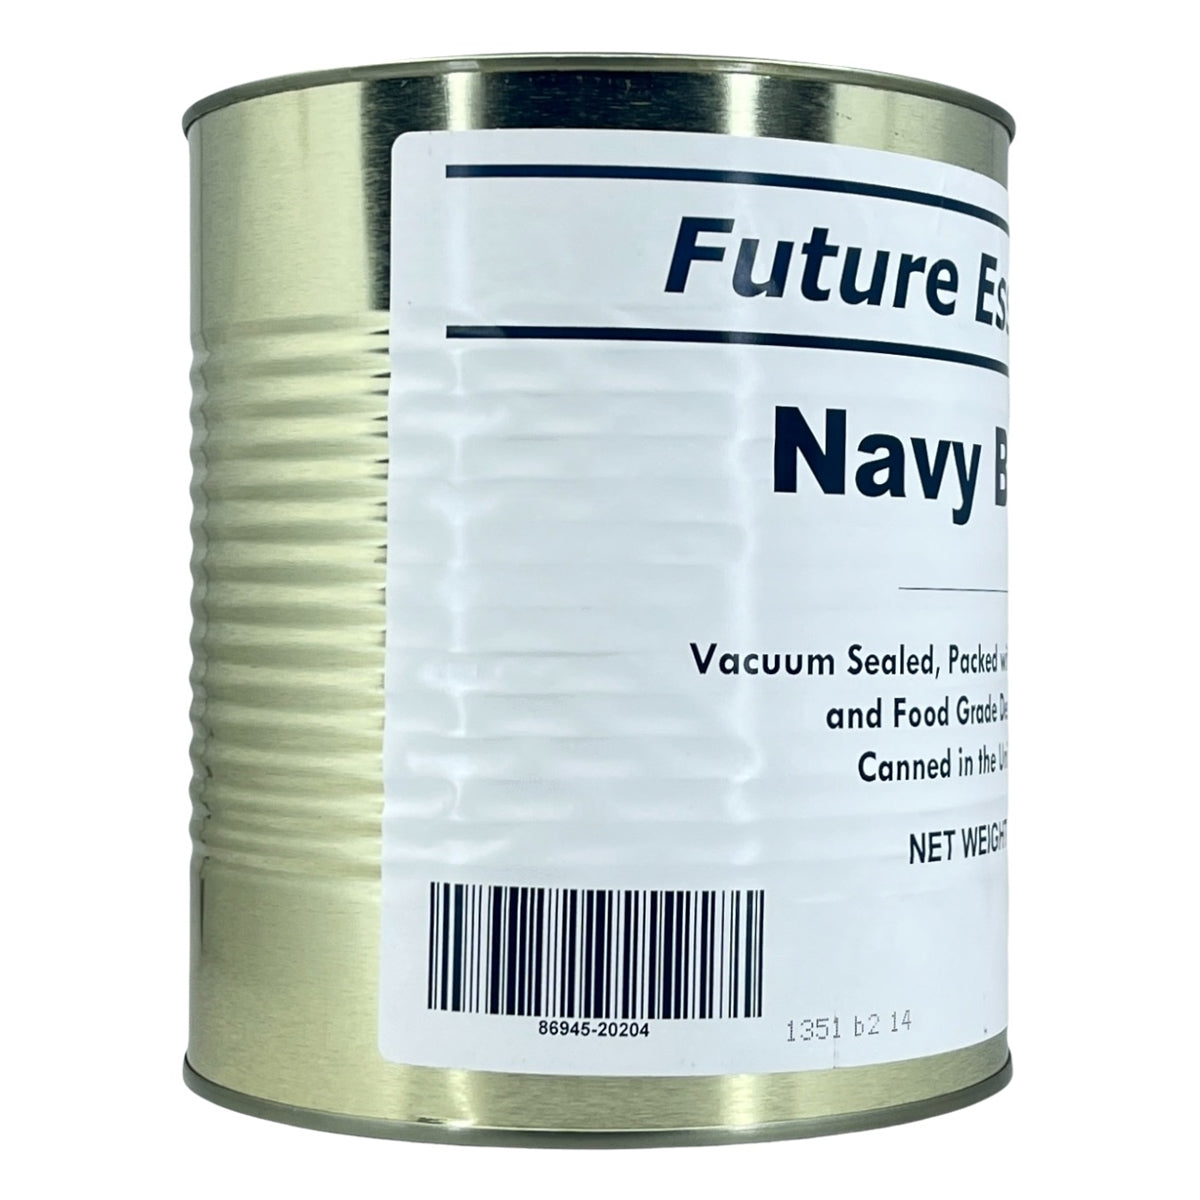 Future Essentials Small White Navy Beans